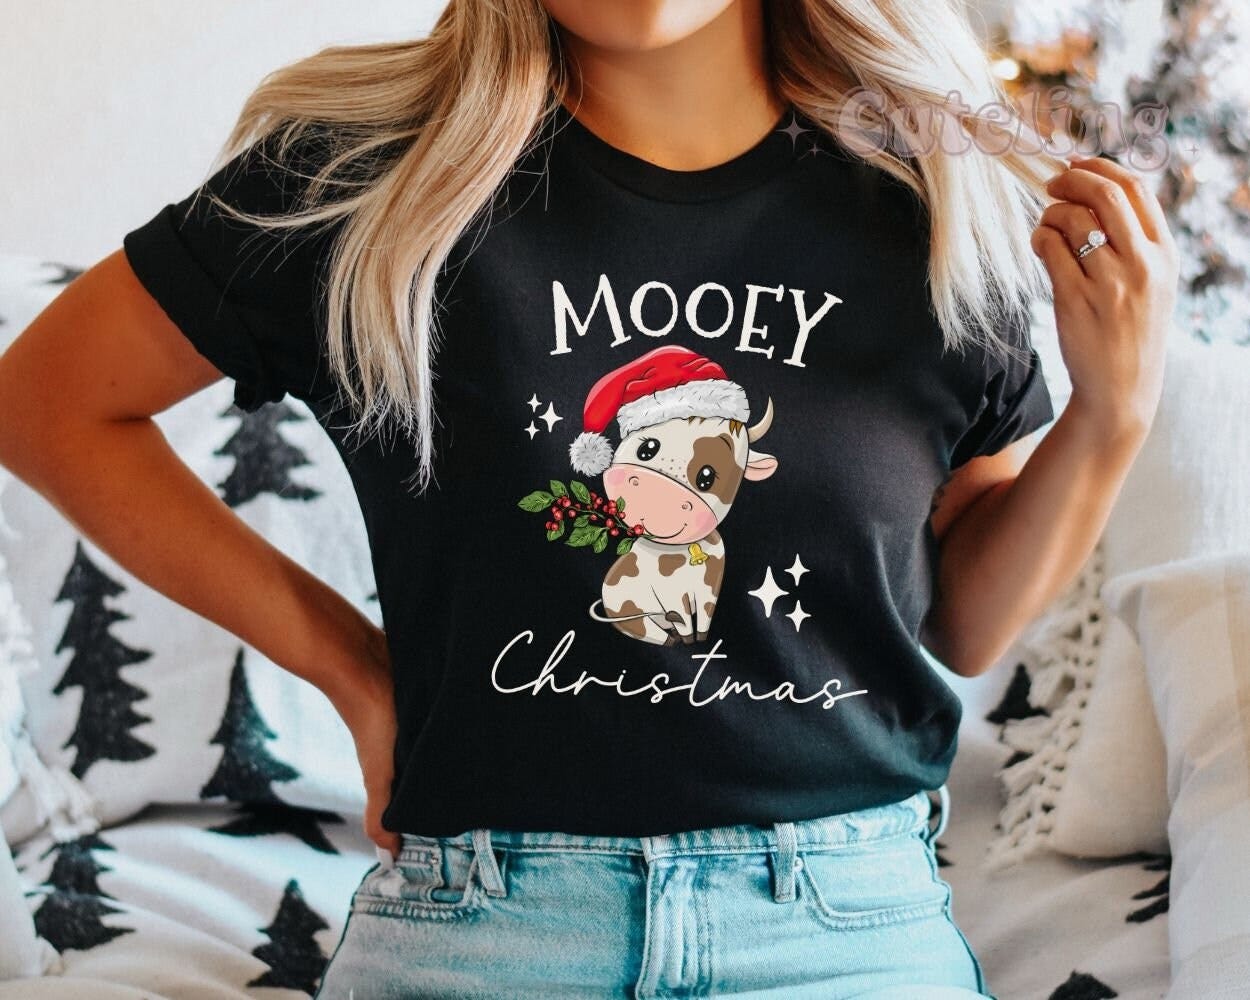 Mooey Christmas Shirt, Cow Christmas Shirt, Christmas Cow Shirt, Winter Shirt for women, Funny Christmas Holiday Shirts for women, Farm tops